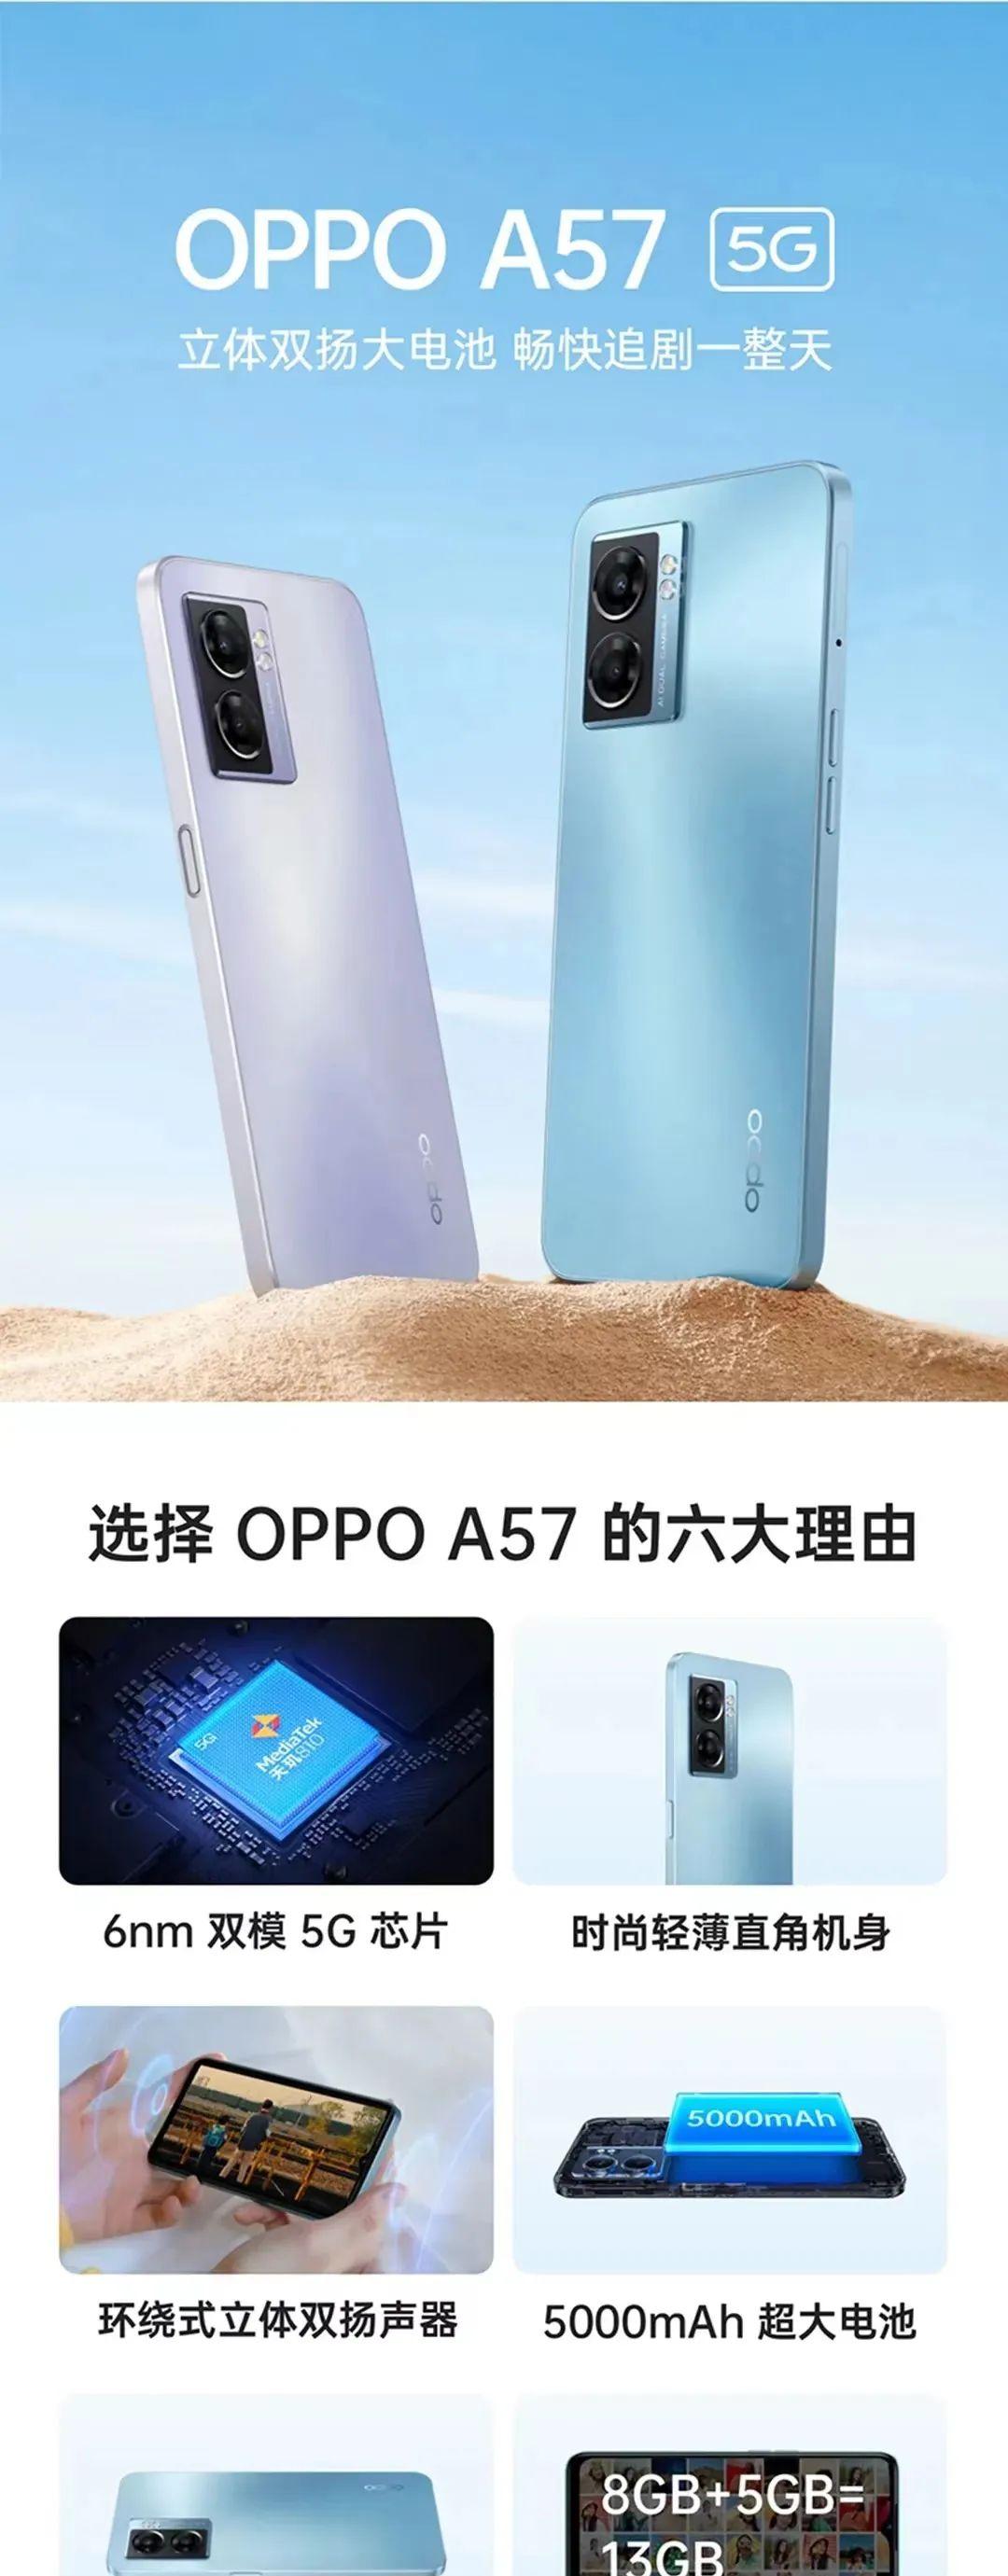 oppoa57手机价格和参数(详细介绍OPPO A57手机参数)